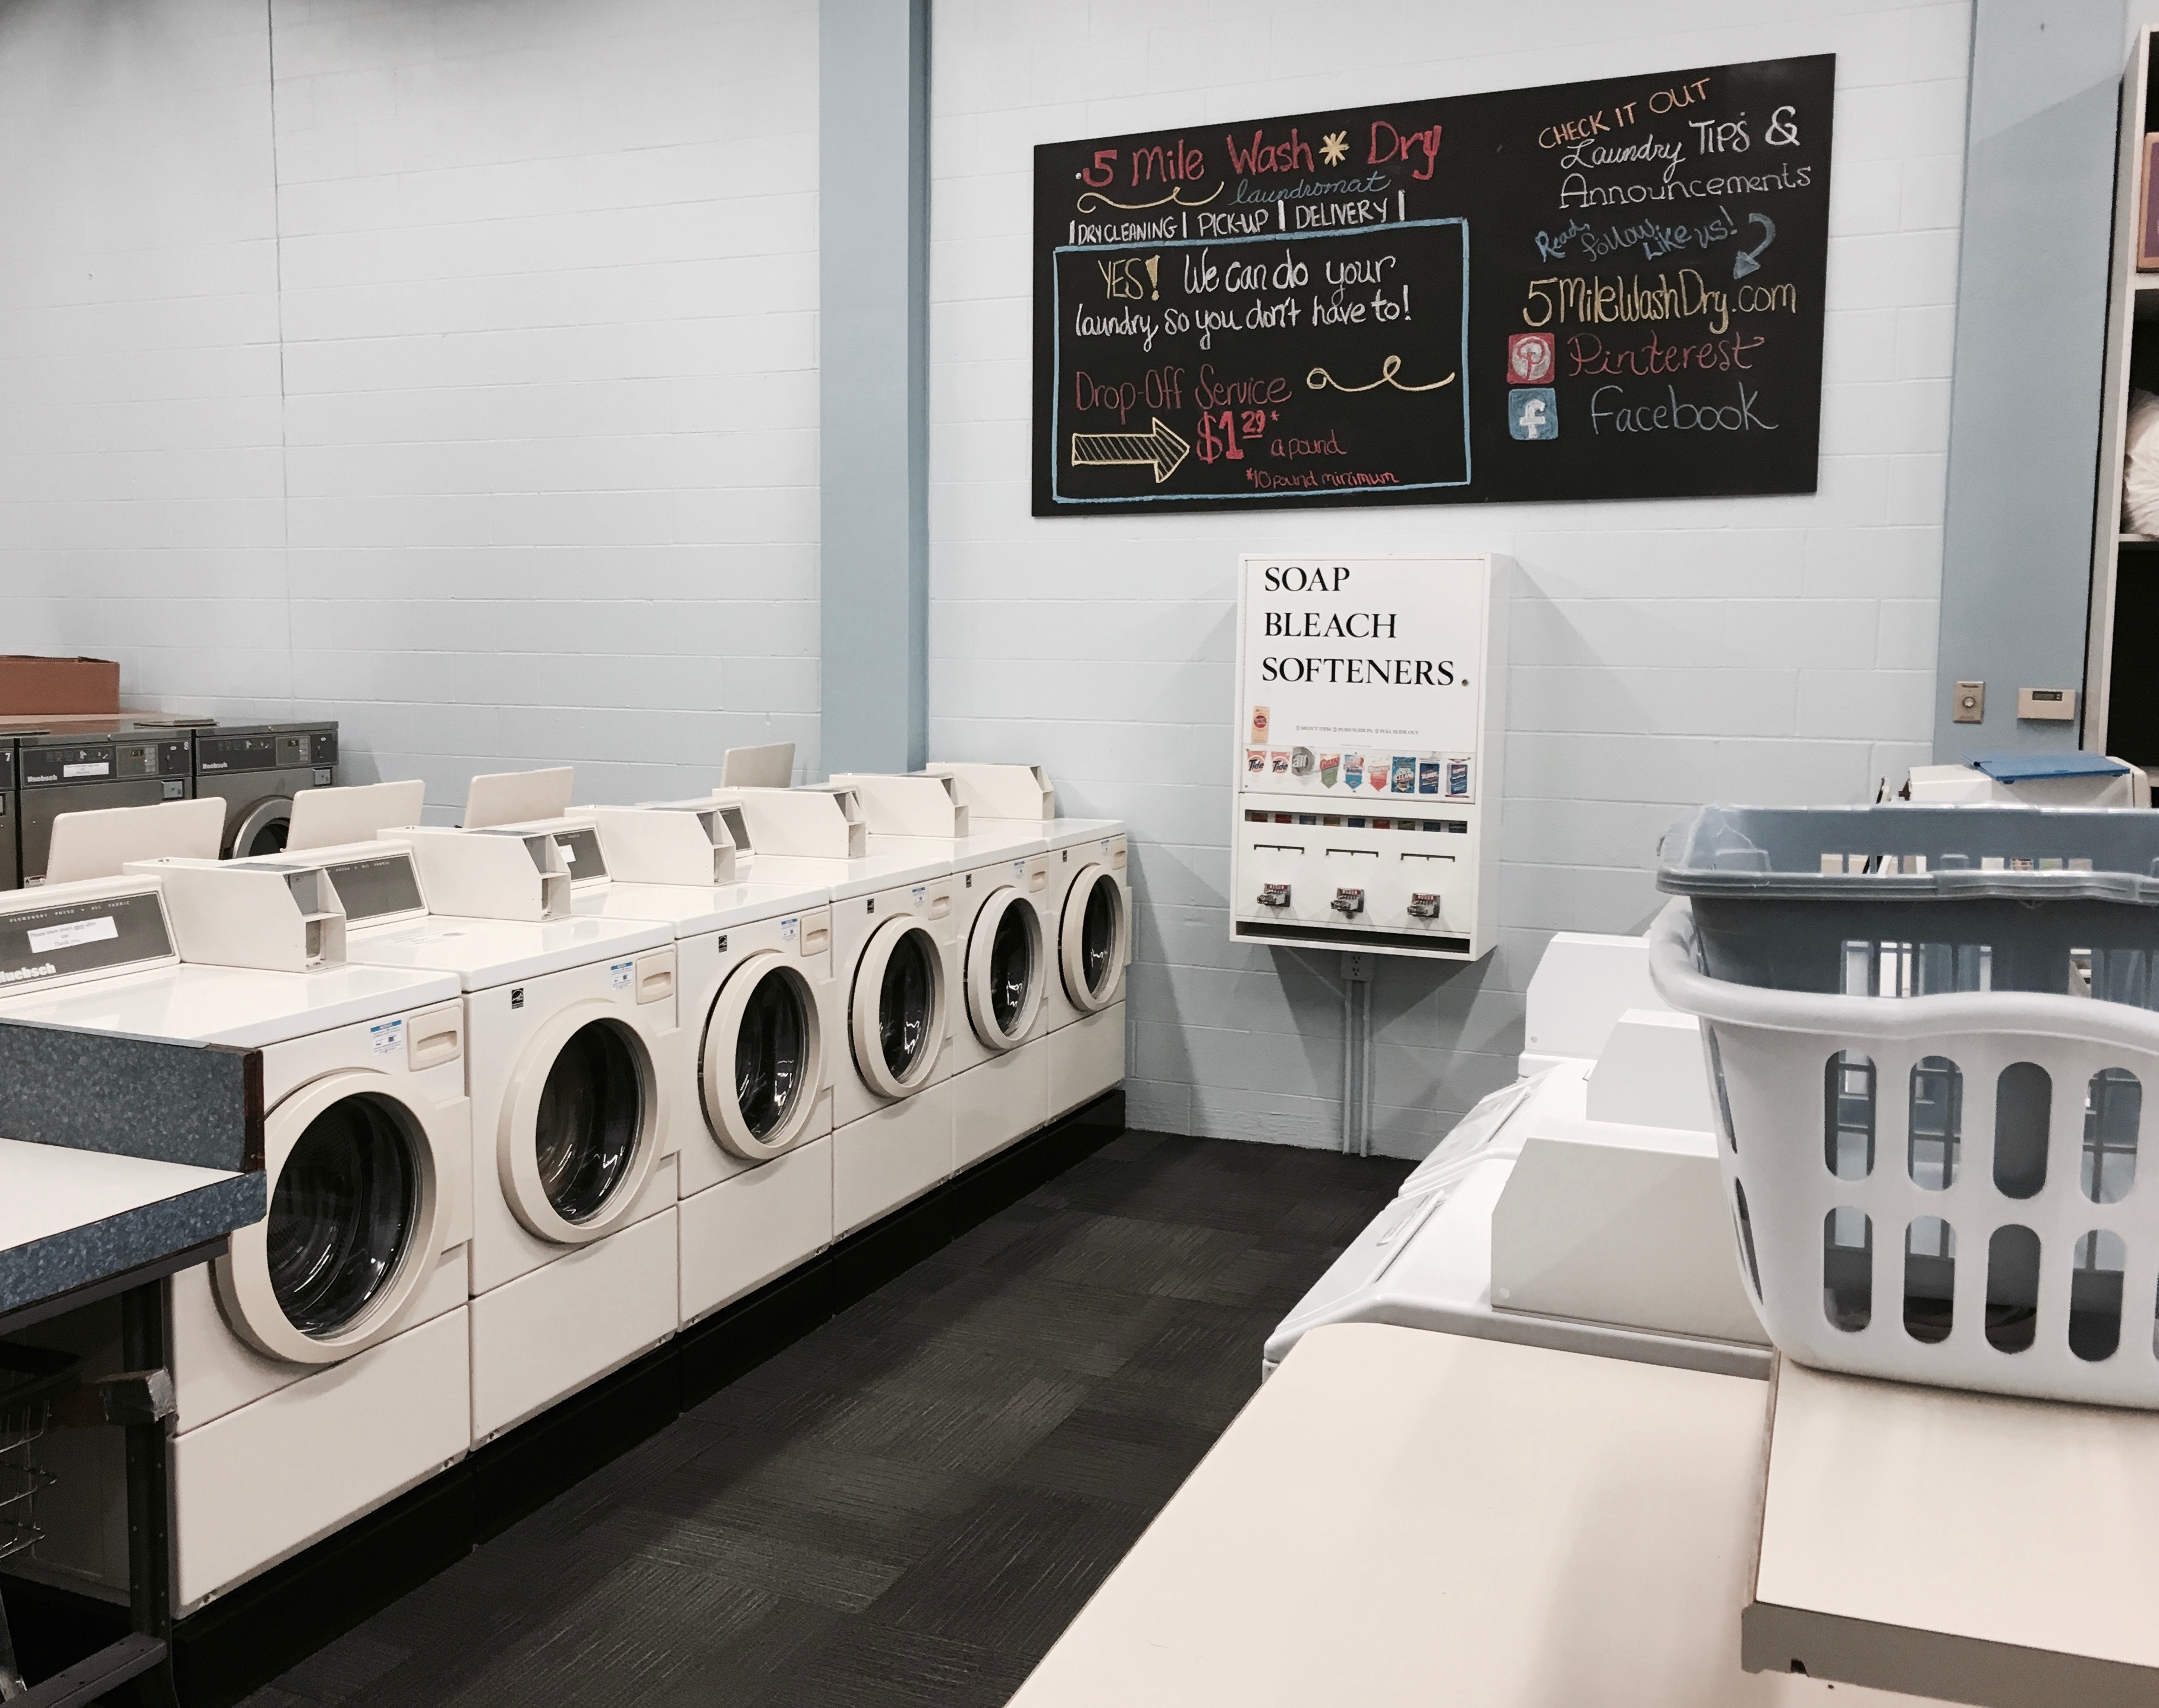 Thompson Laundry Company - 5 Mile Wash & Dry | 1920 W Francis Ave, Spokane, WA, 99205 | +1 (509) 326-4495